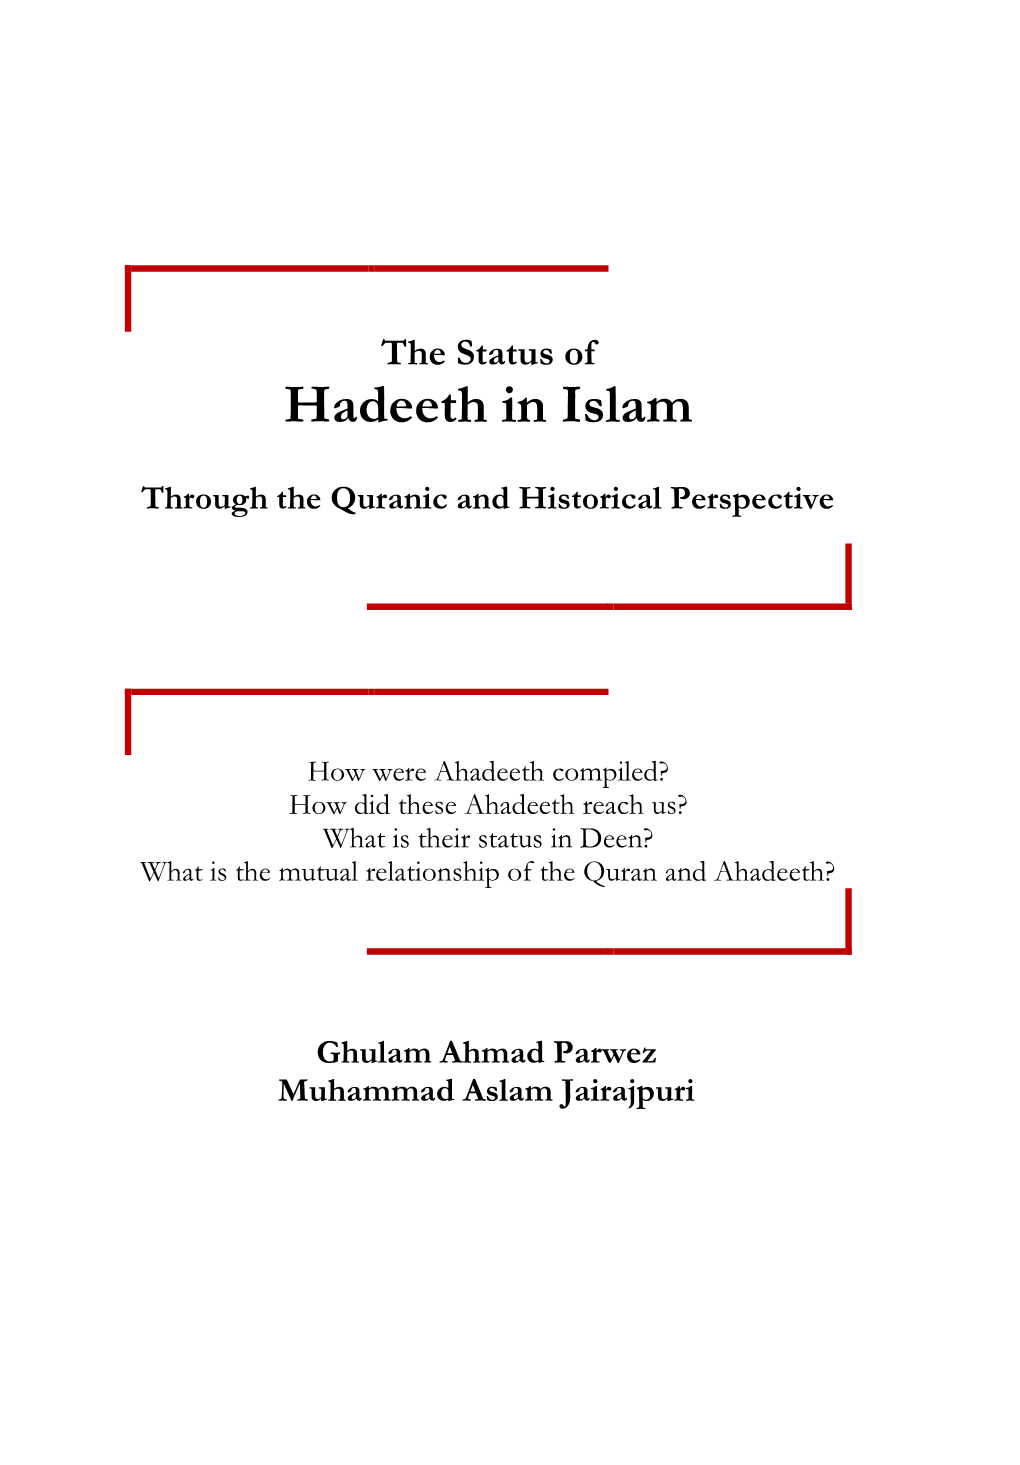 The Status of Hadeeth in Islam – G a Parwez & Aslam Jairajpuri